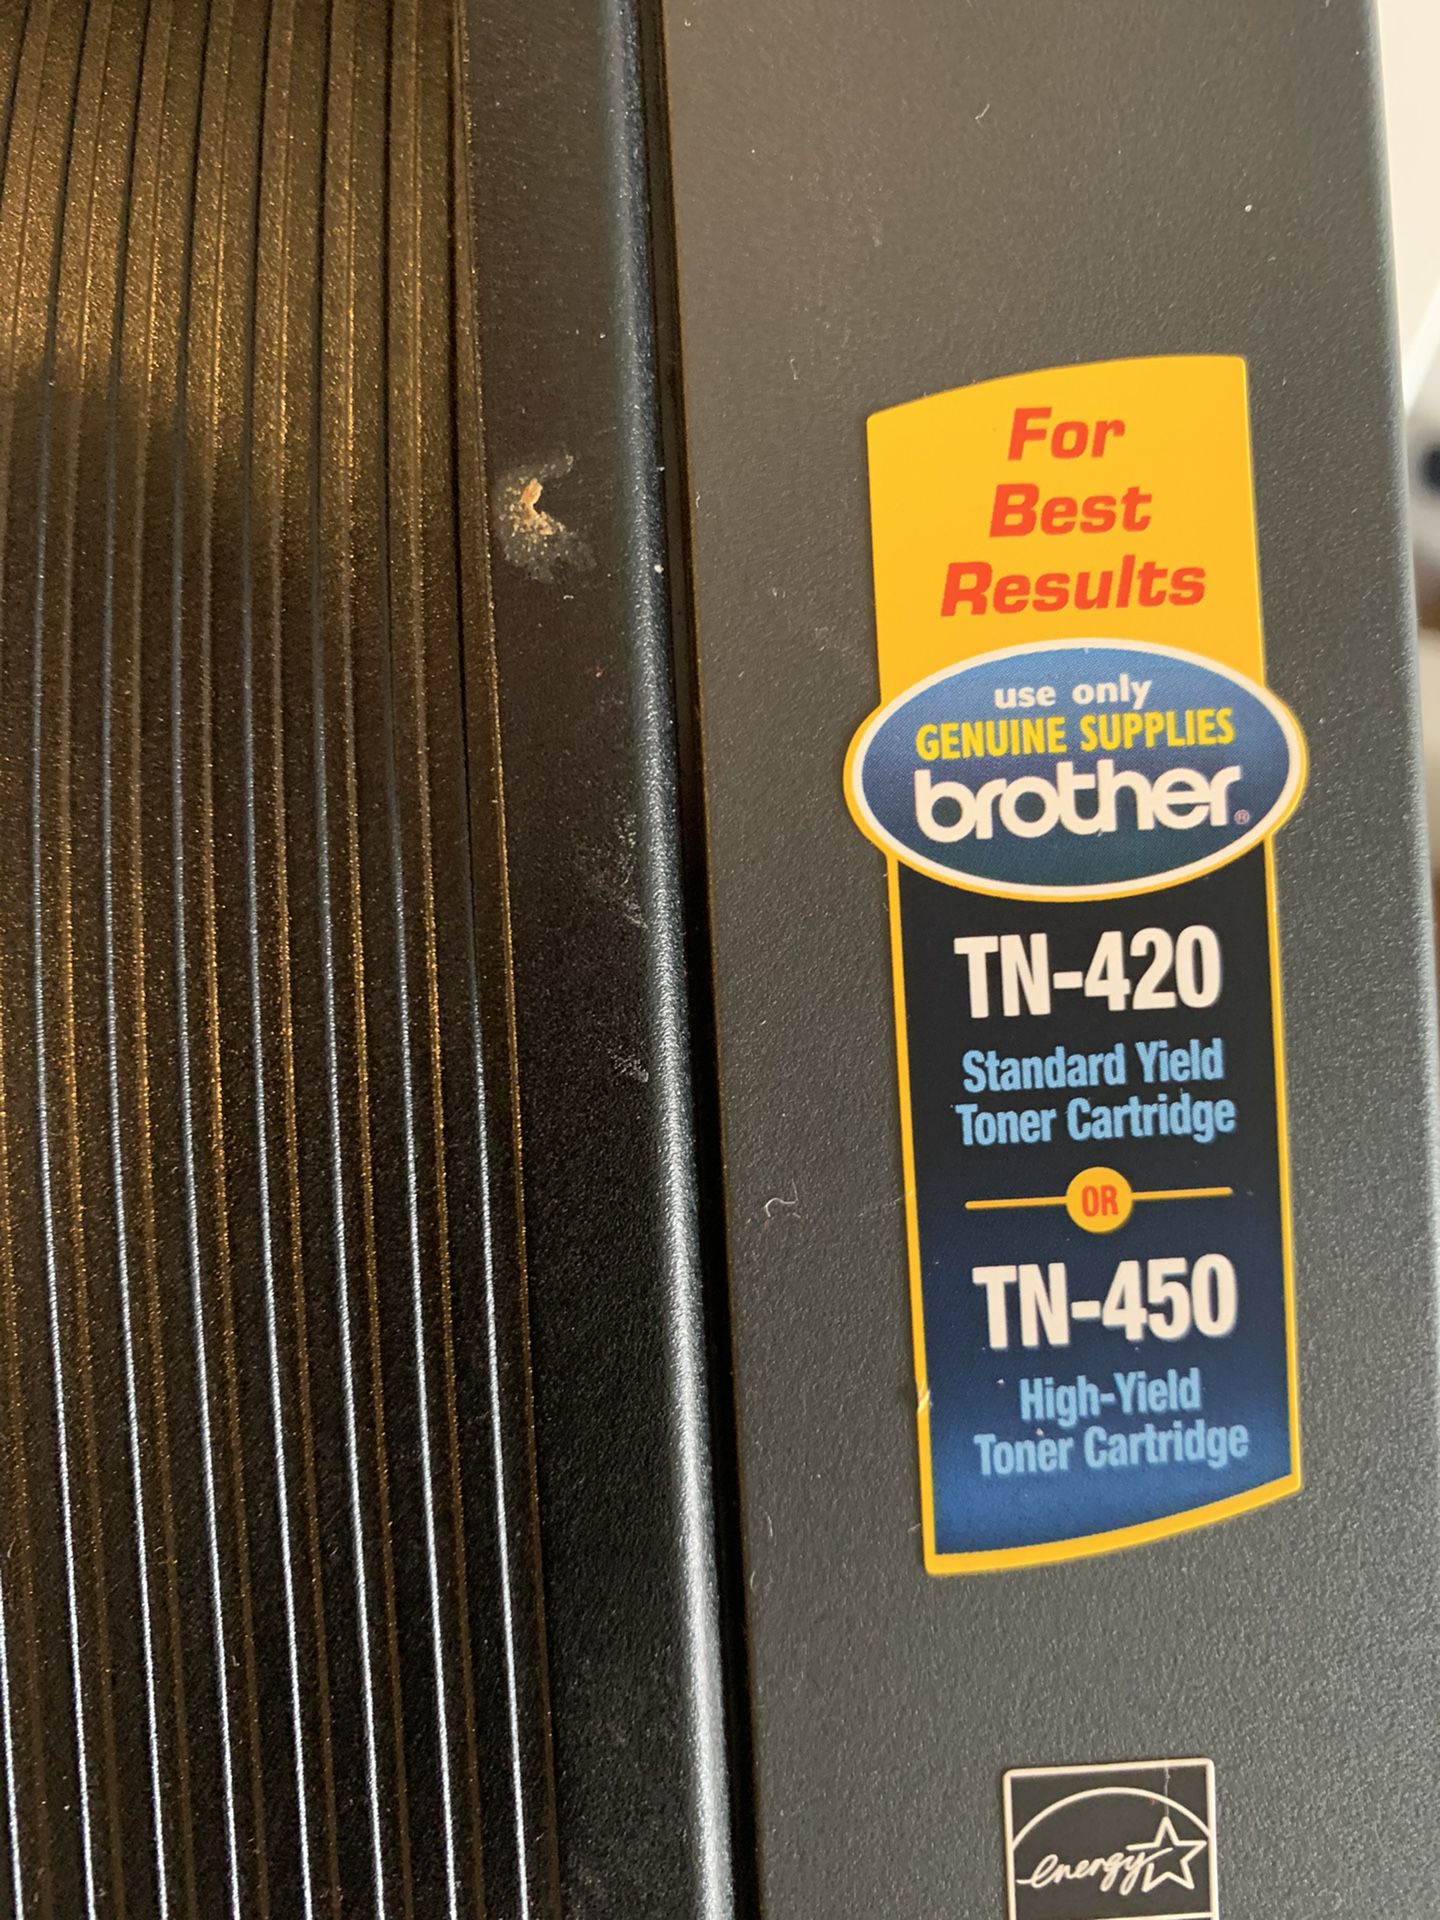 Brother laser Printer Works Great!!